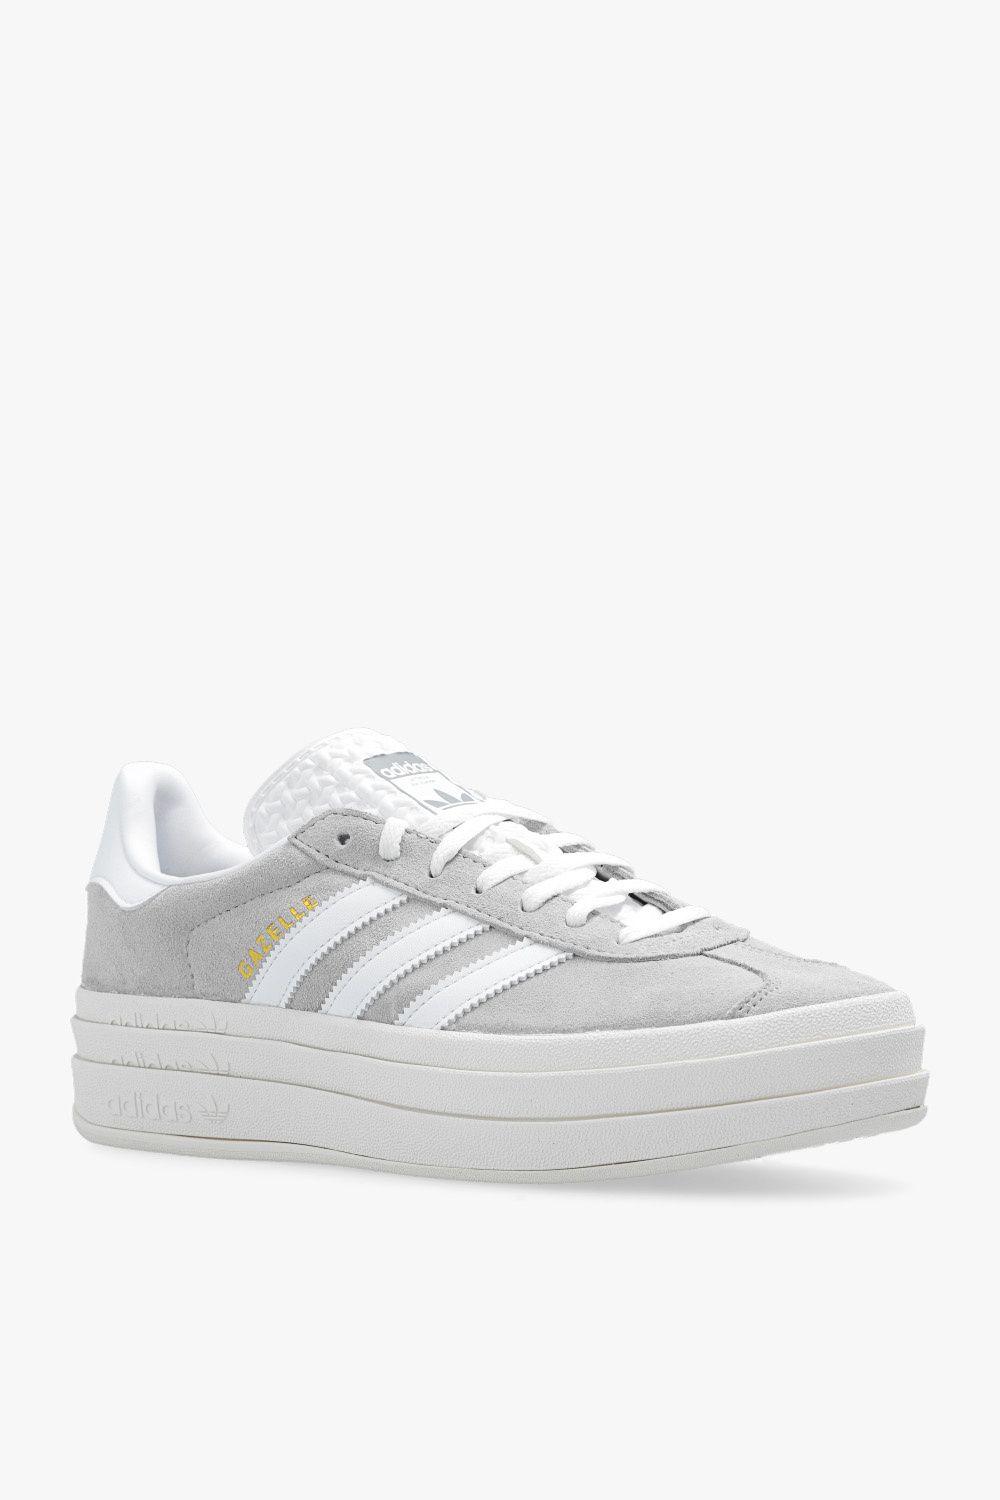 adidas Originals 'gazelle Bold W' Sneakers in White | Lyst